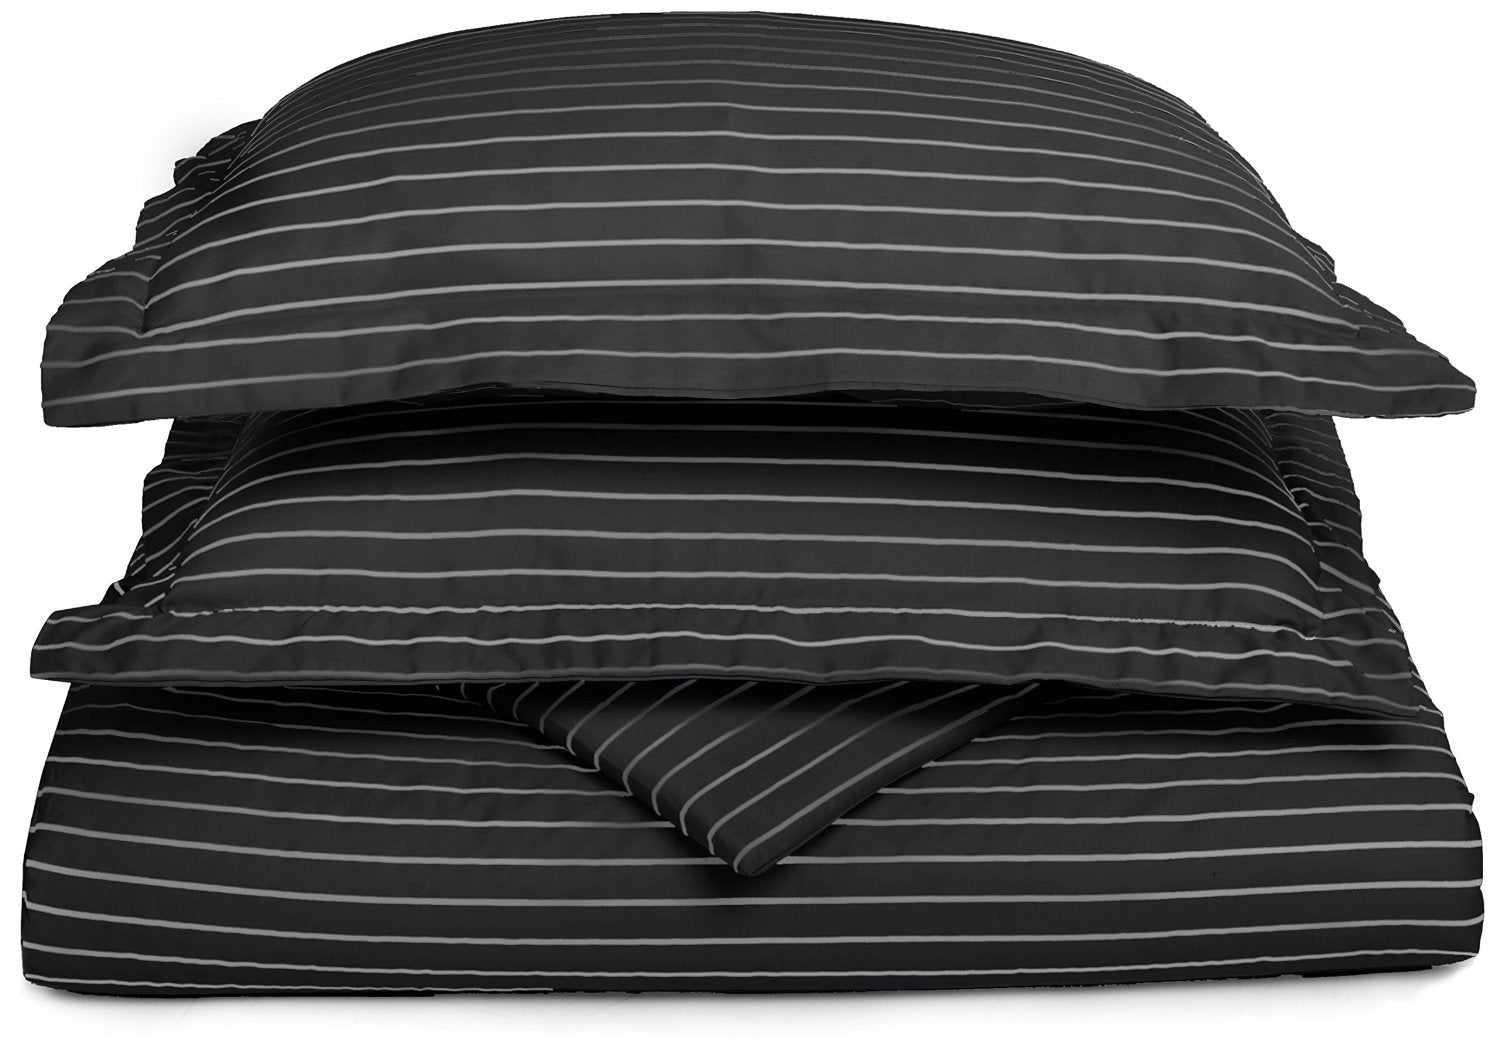 Superior Cotton and Polyester Blend Bahama Stripe Duvet Cover Set - Black